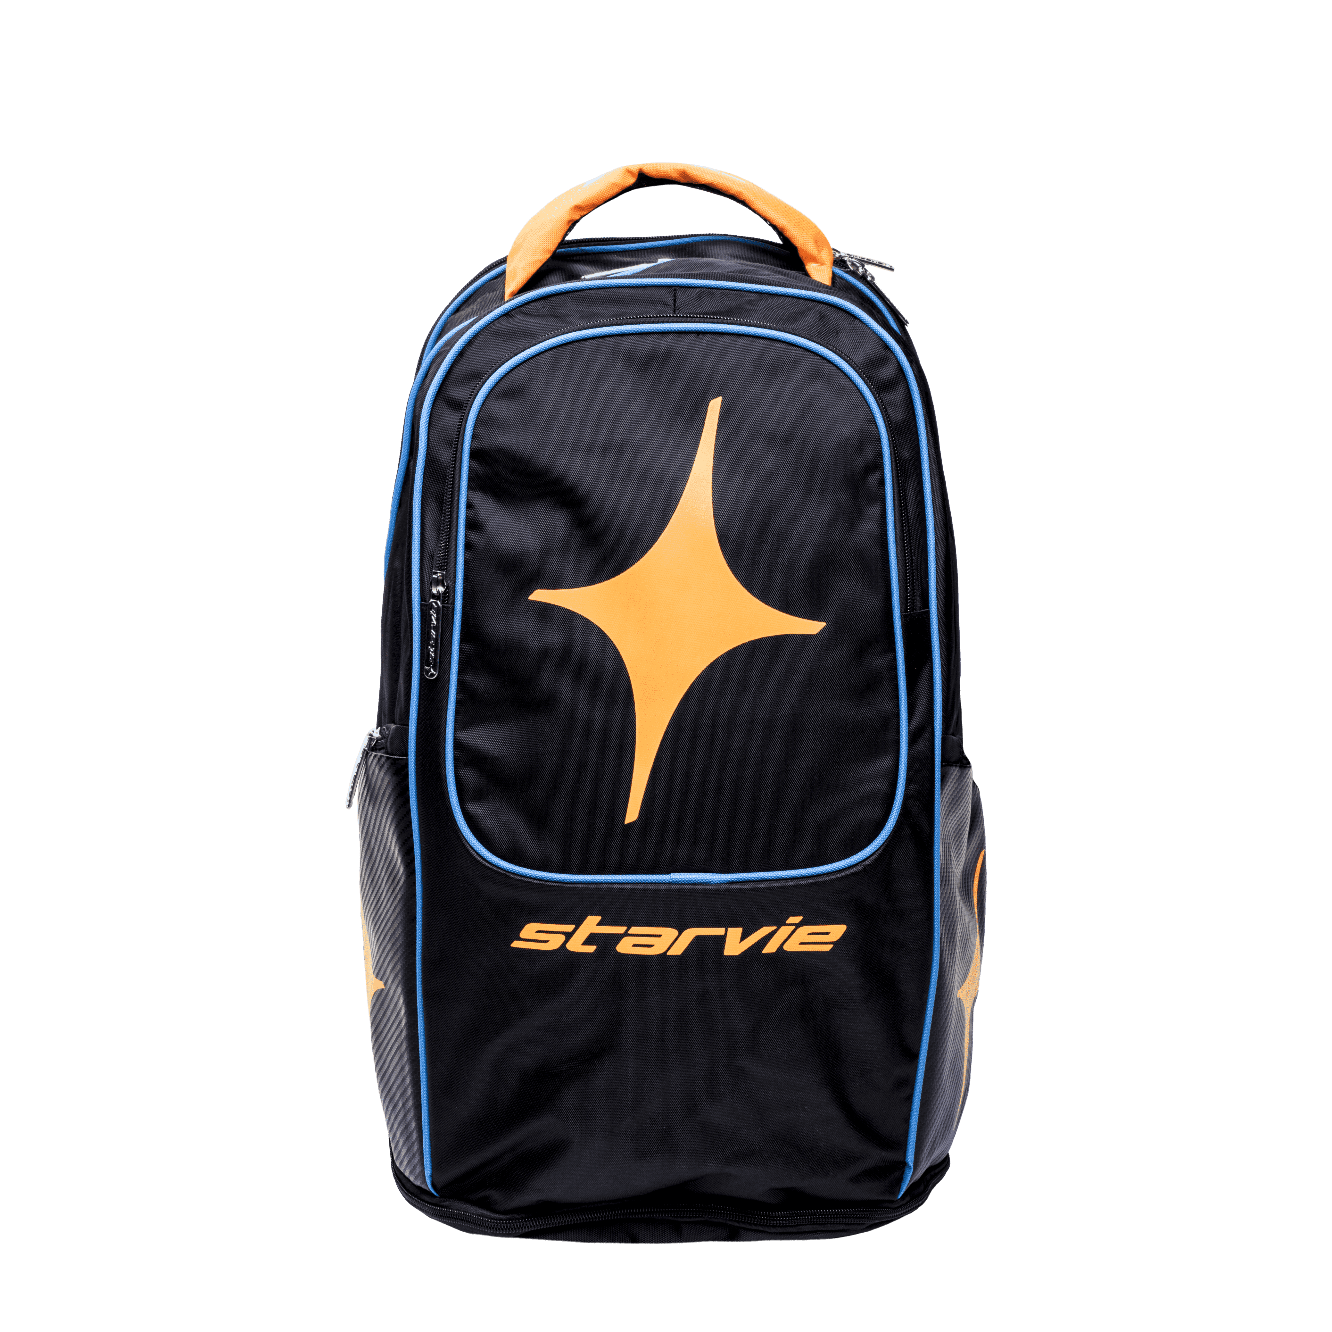 Mochila Galaxy naranja marca Star Vie